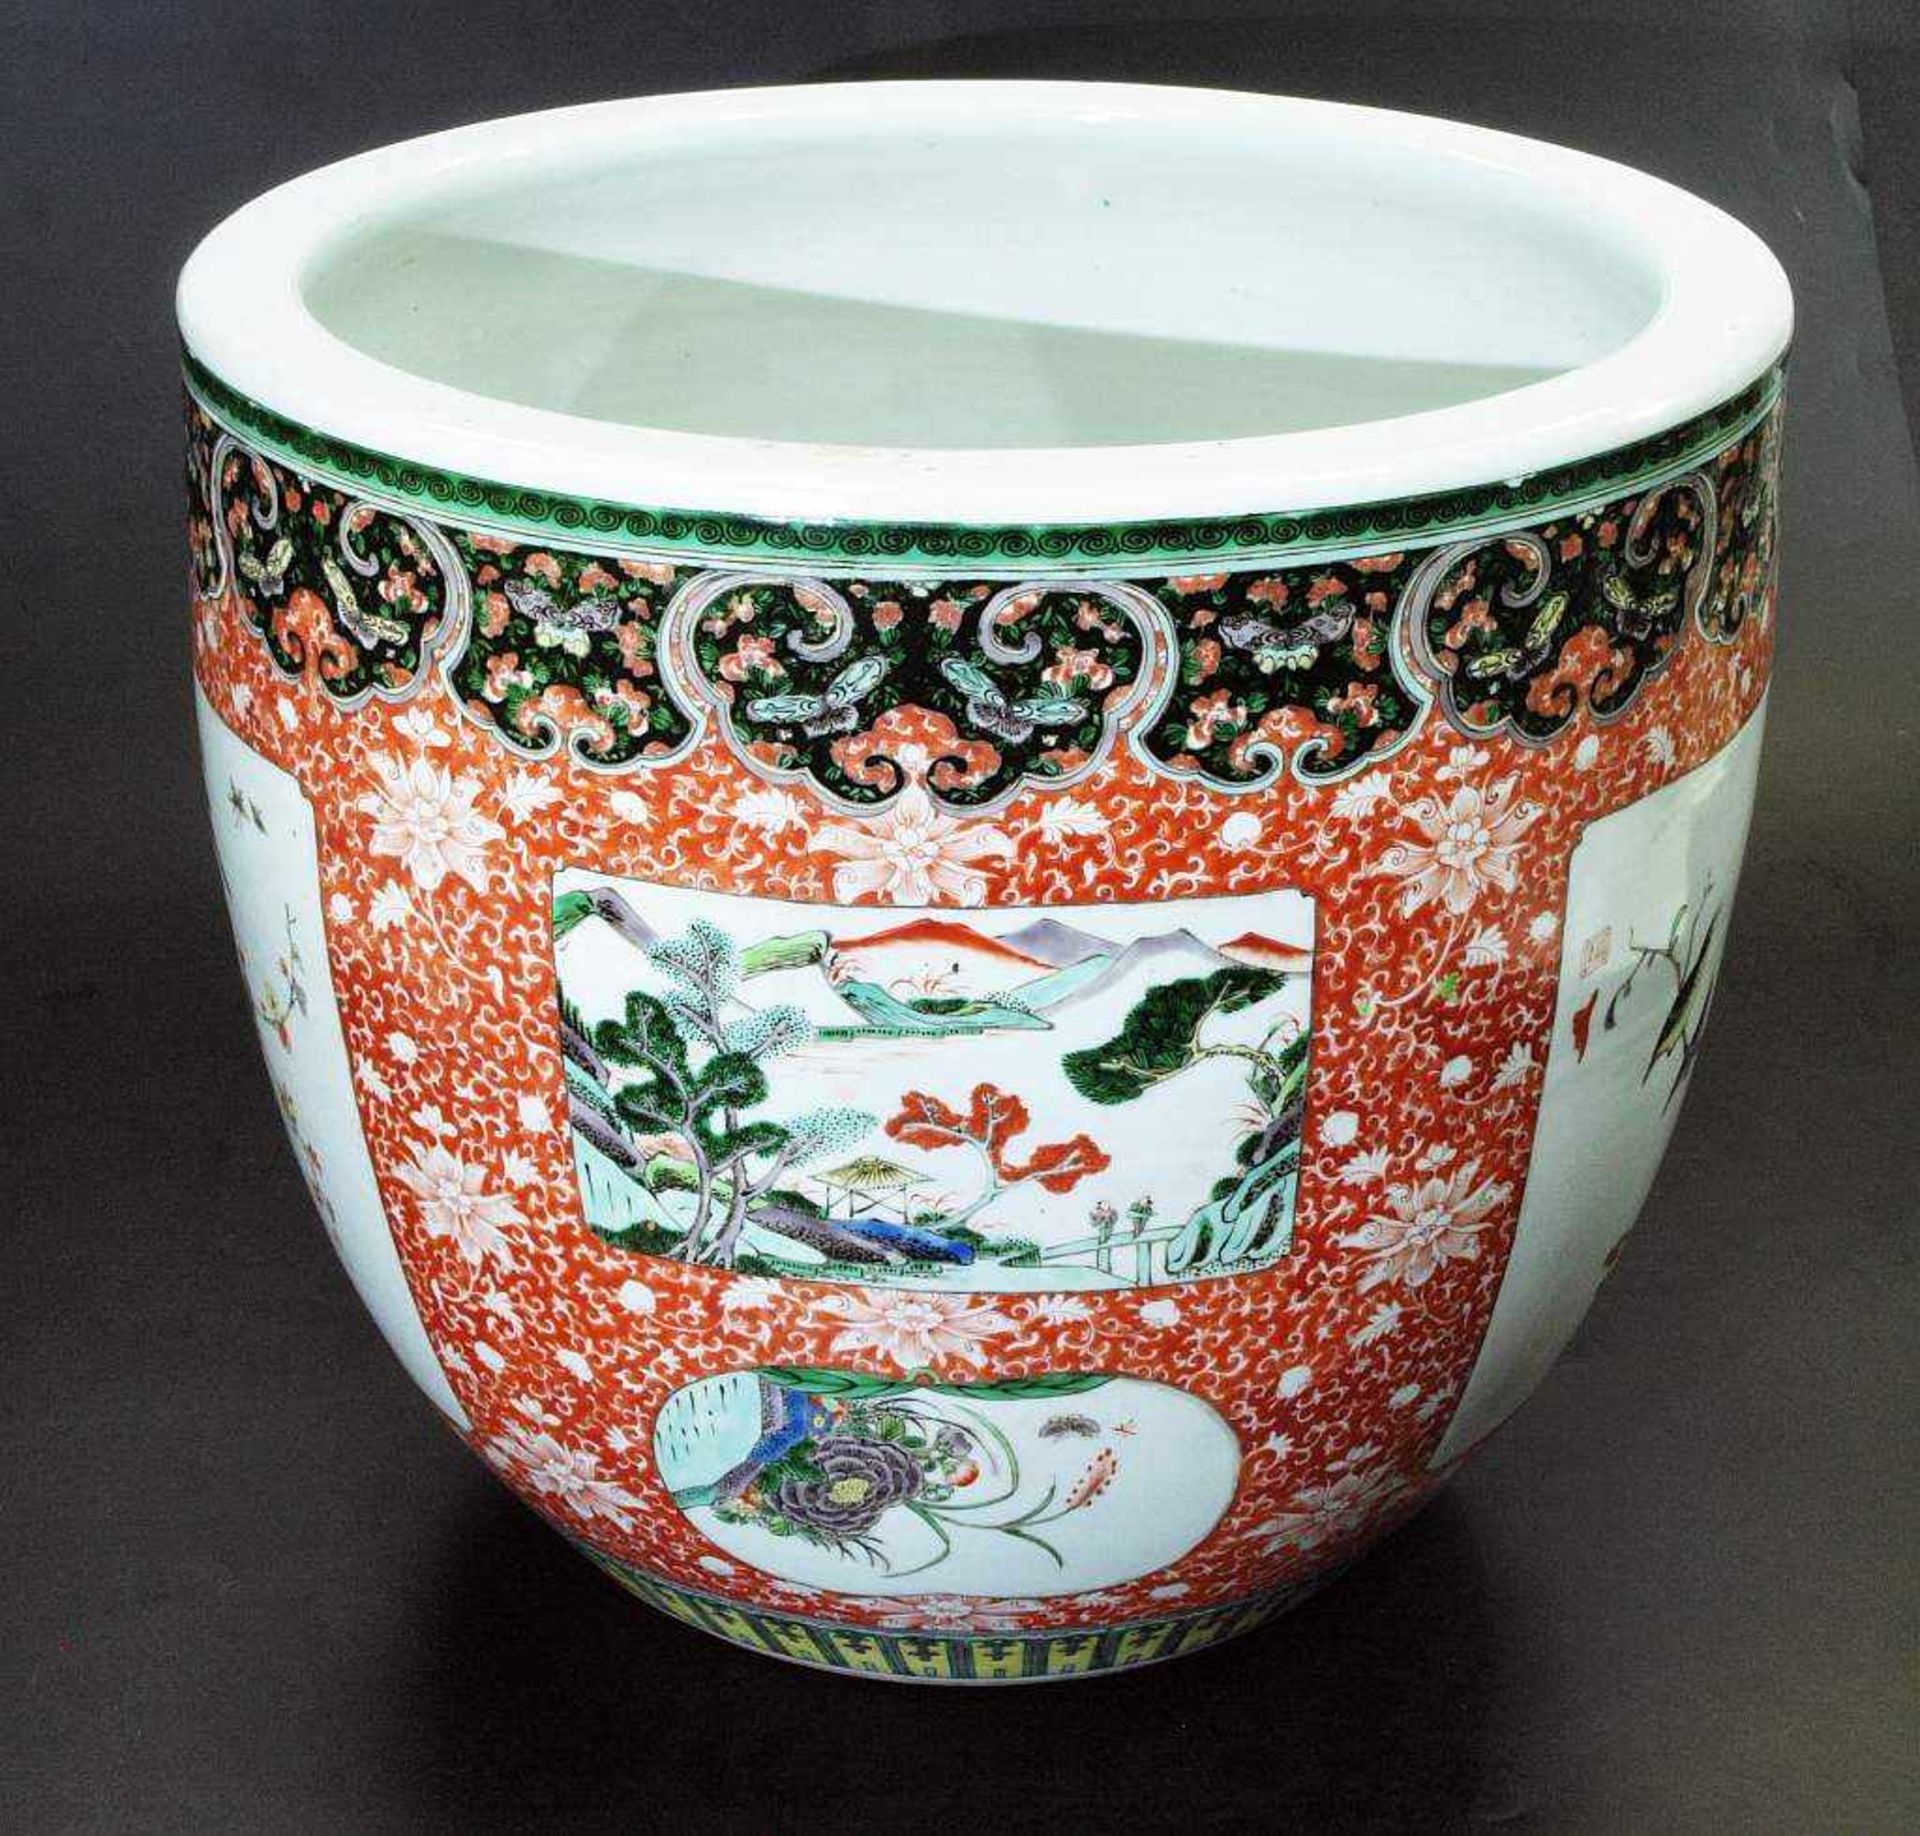 Fischbowl . Fischbowl. Asien 20. Jahrhundert. Porzellantopf, runder Stand, bauchige Form, polychrome - Image 3 of 5